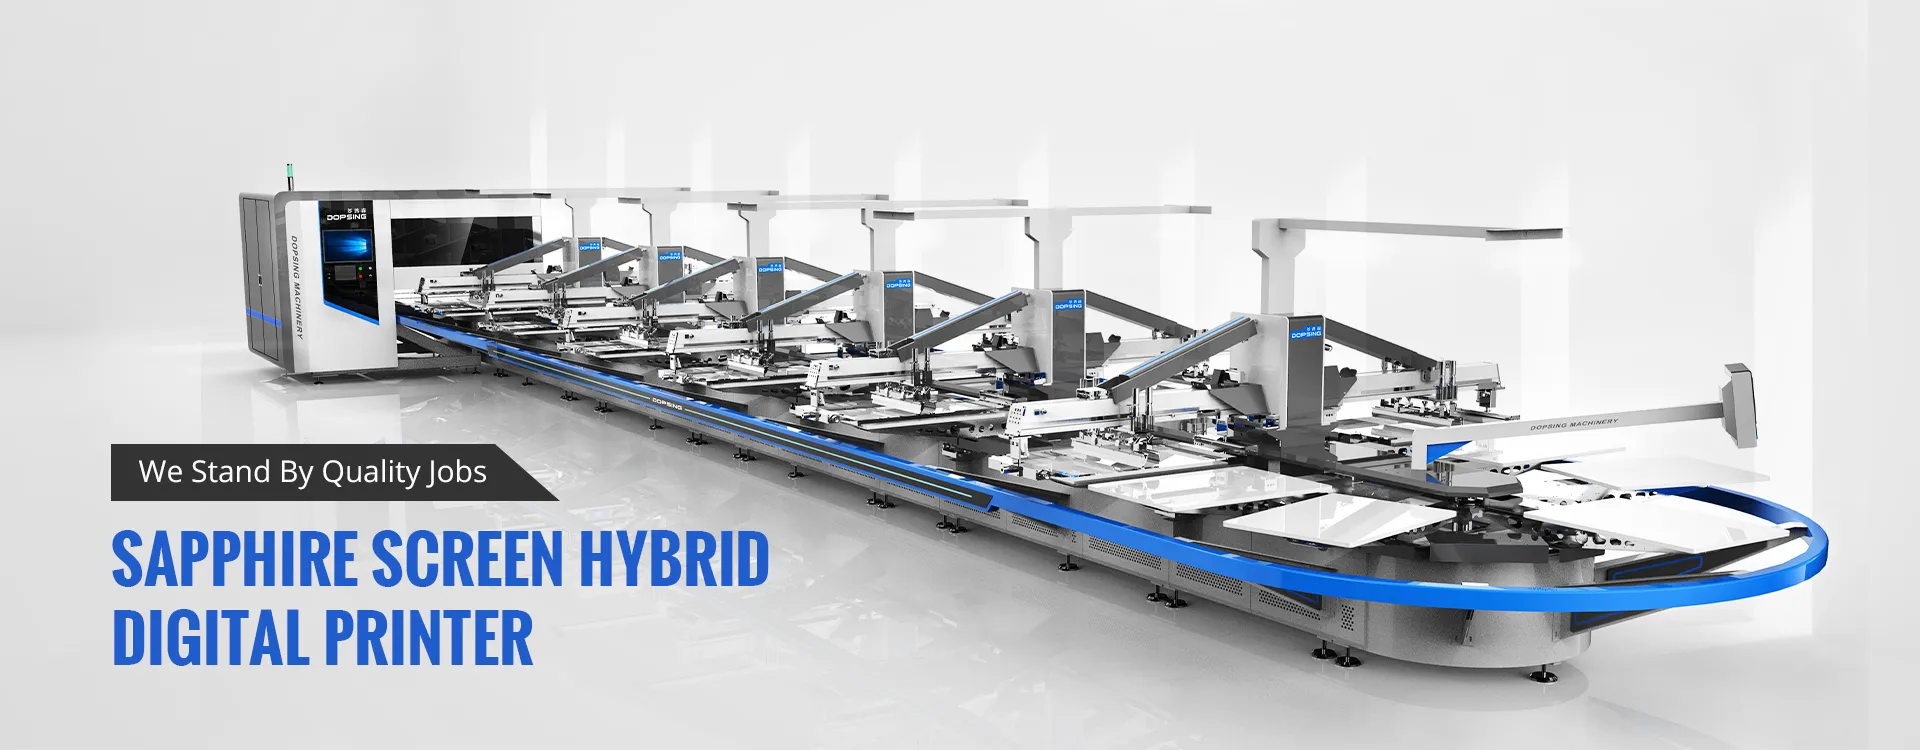 Sapphire Screen Hybrid Digital Printer